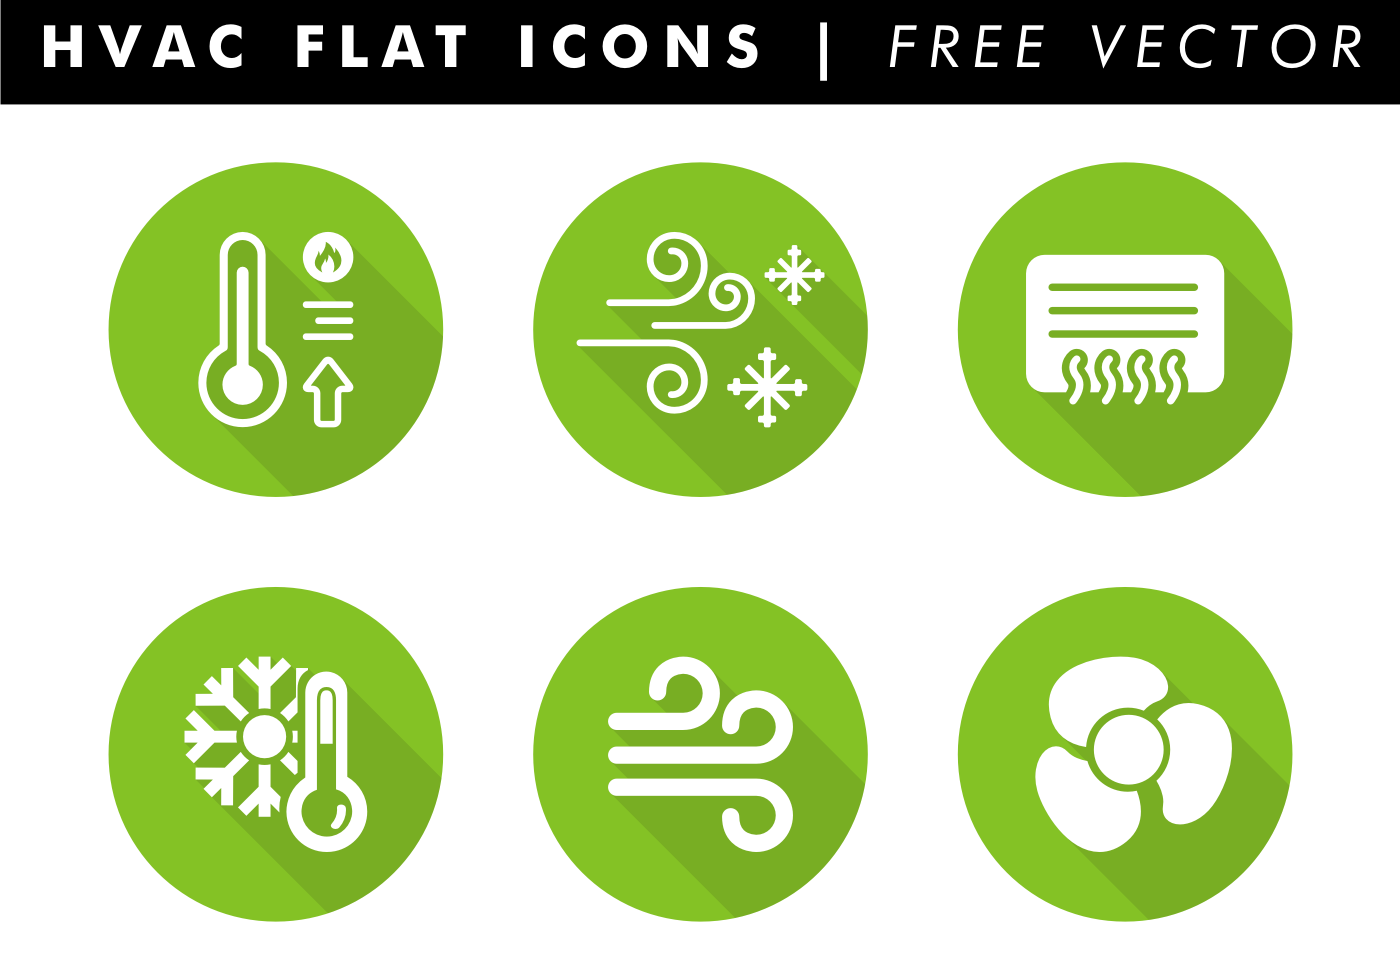 HVAC Flat Icons Free Vector - Download Free Vectors ...